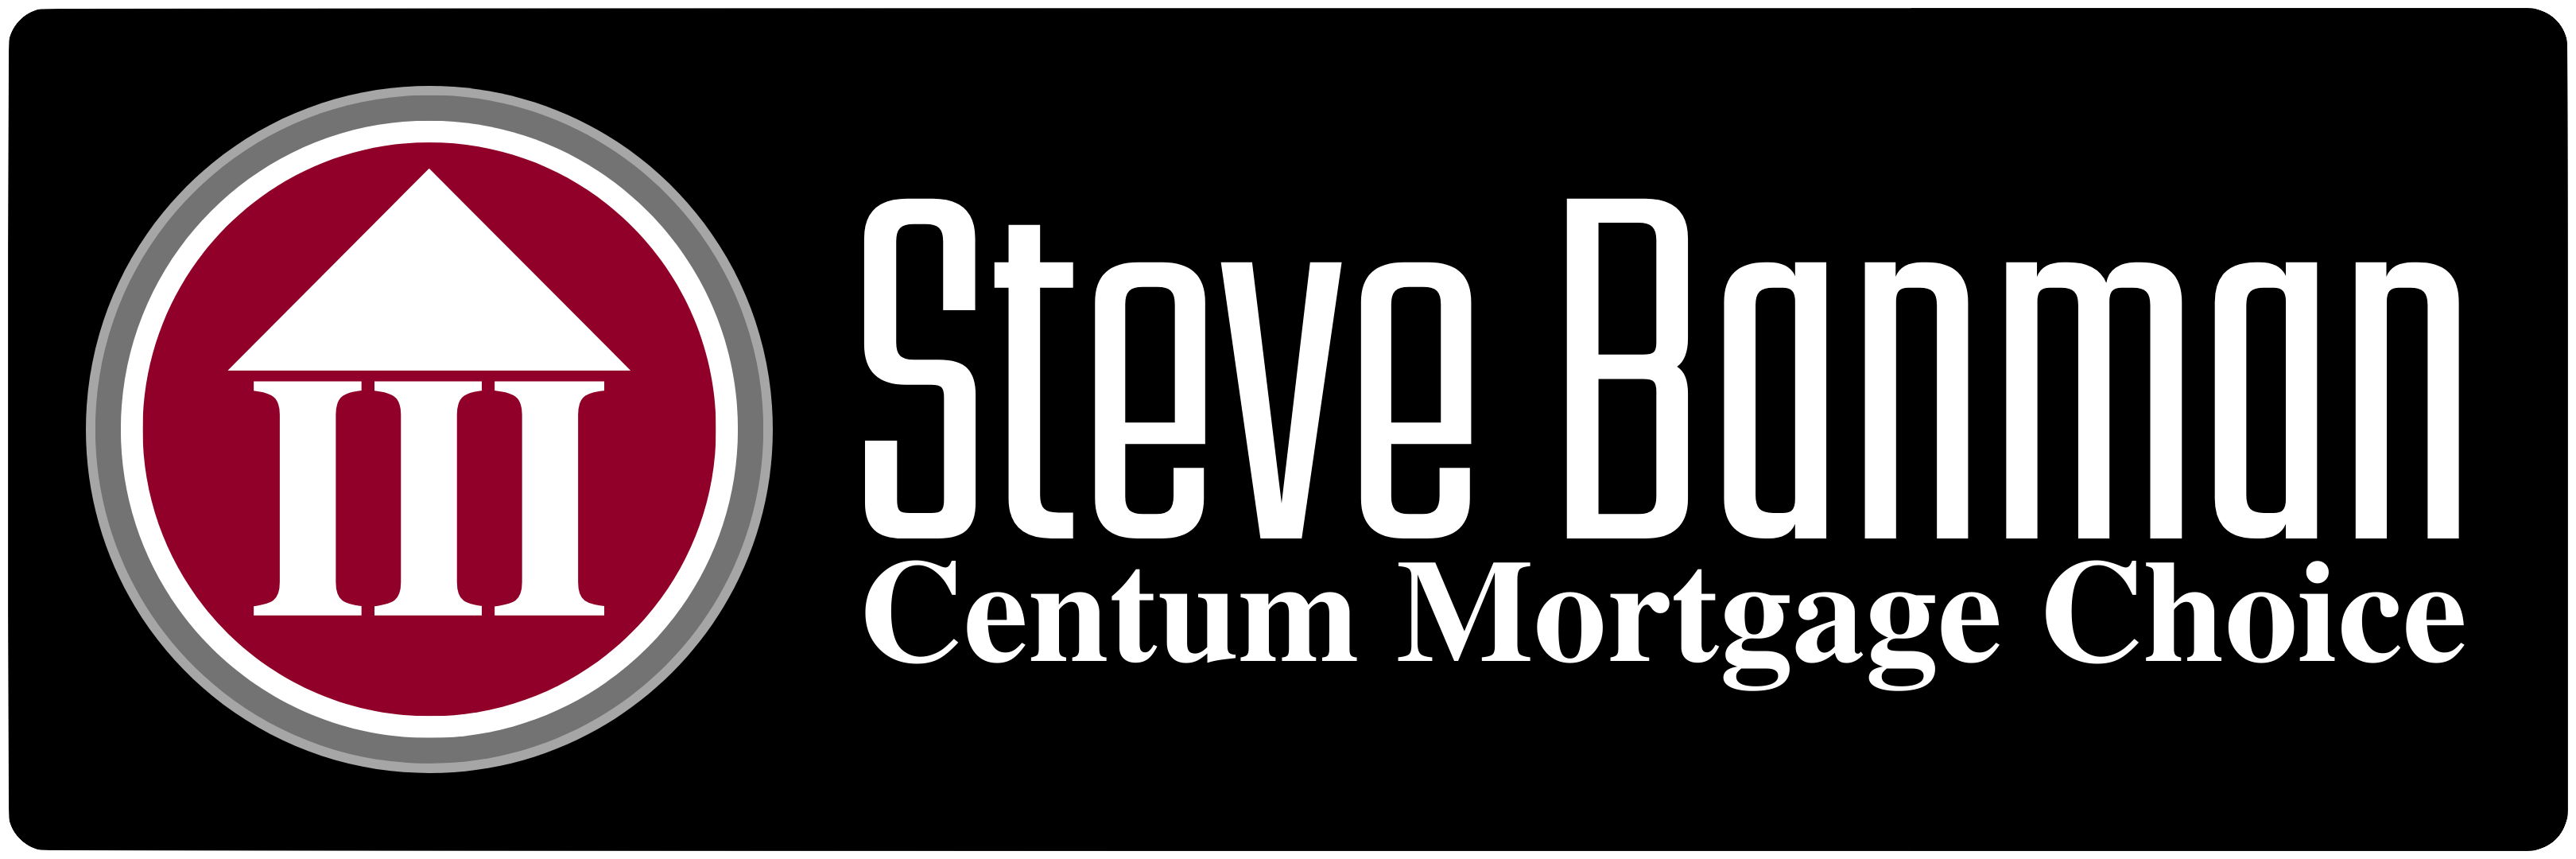 Steve Banman Mortgage